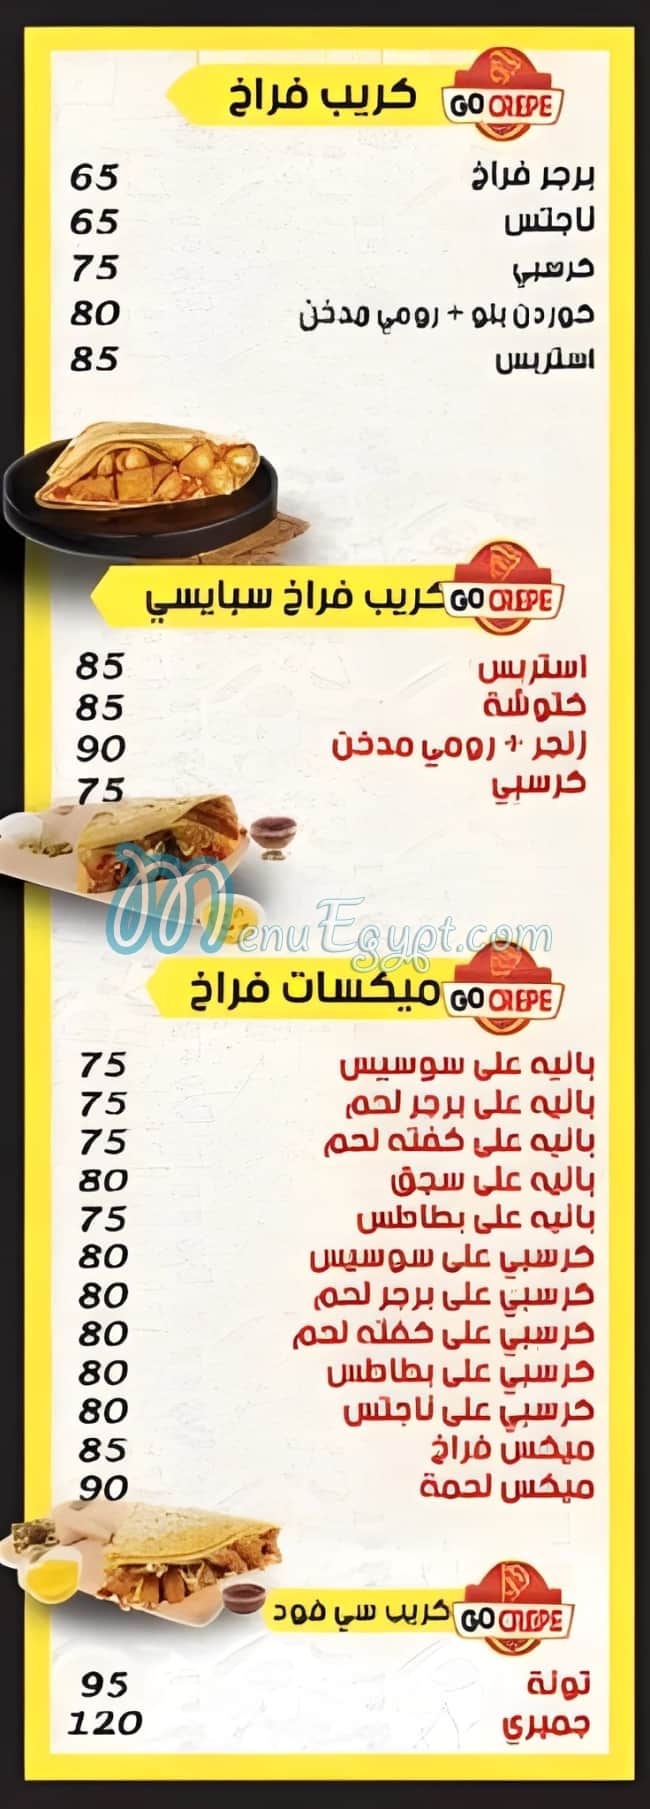 Go Crepe Maadi menu Egypt 1